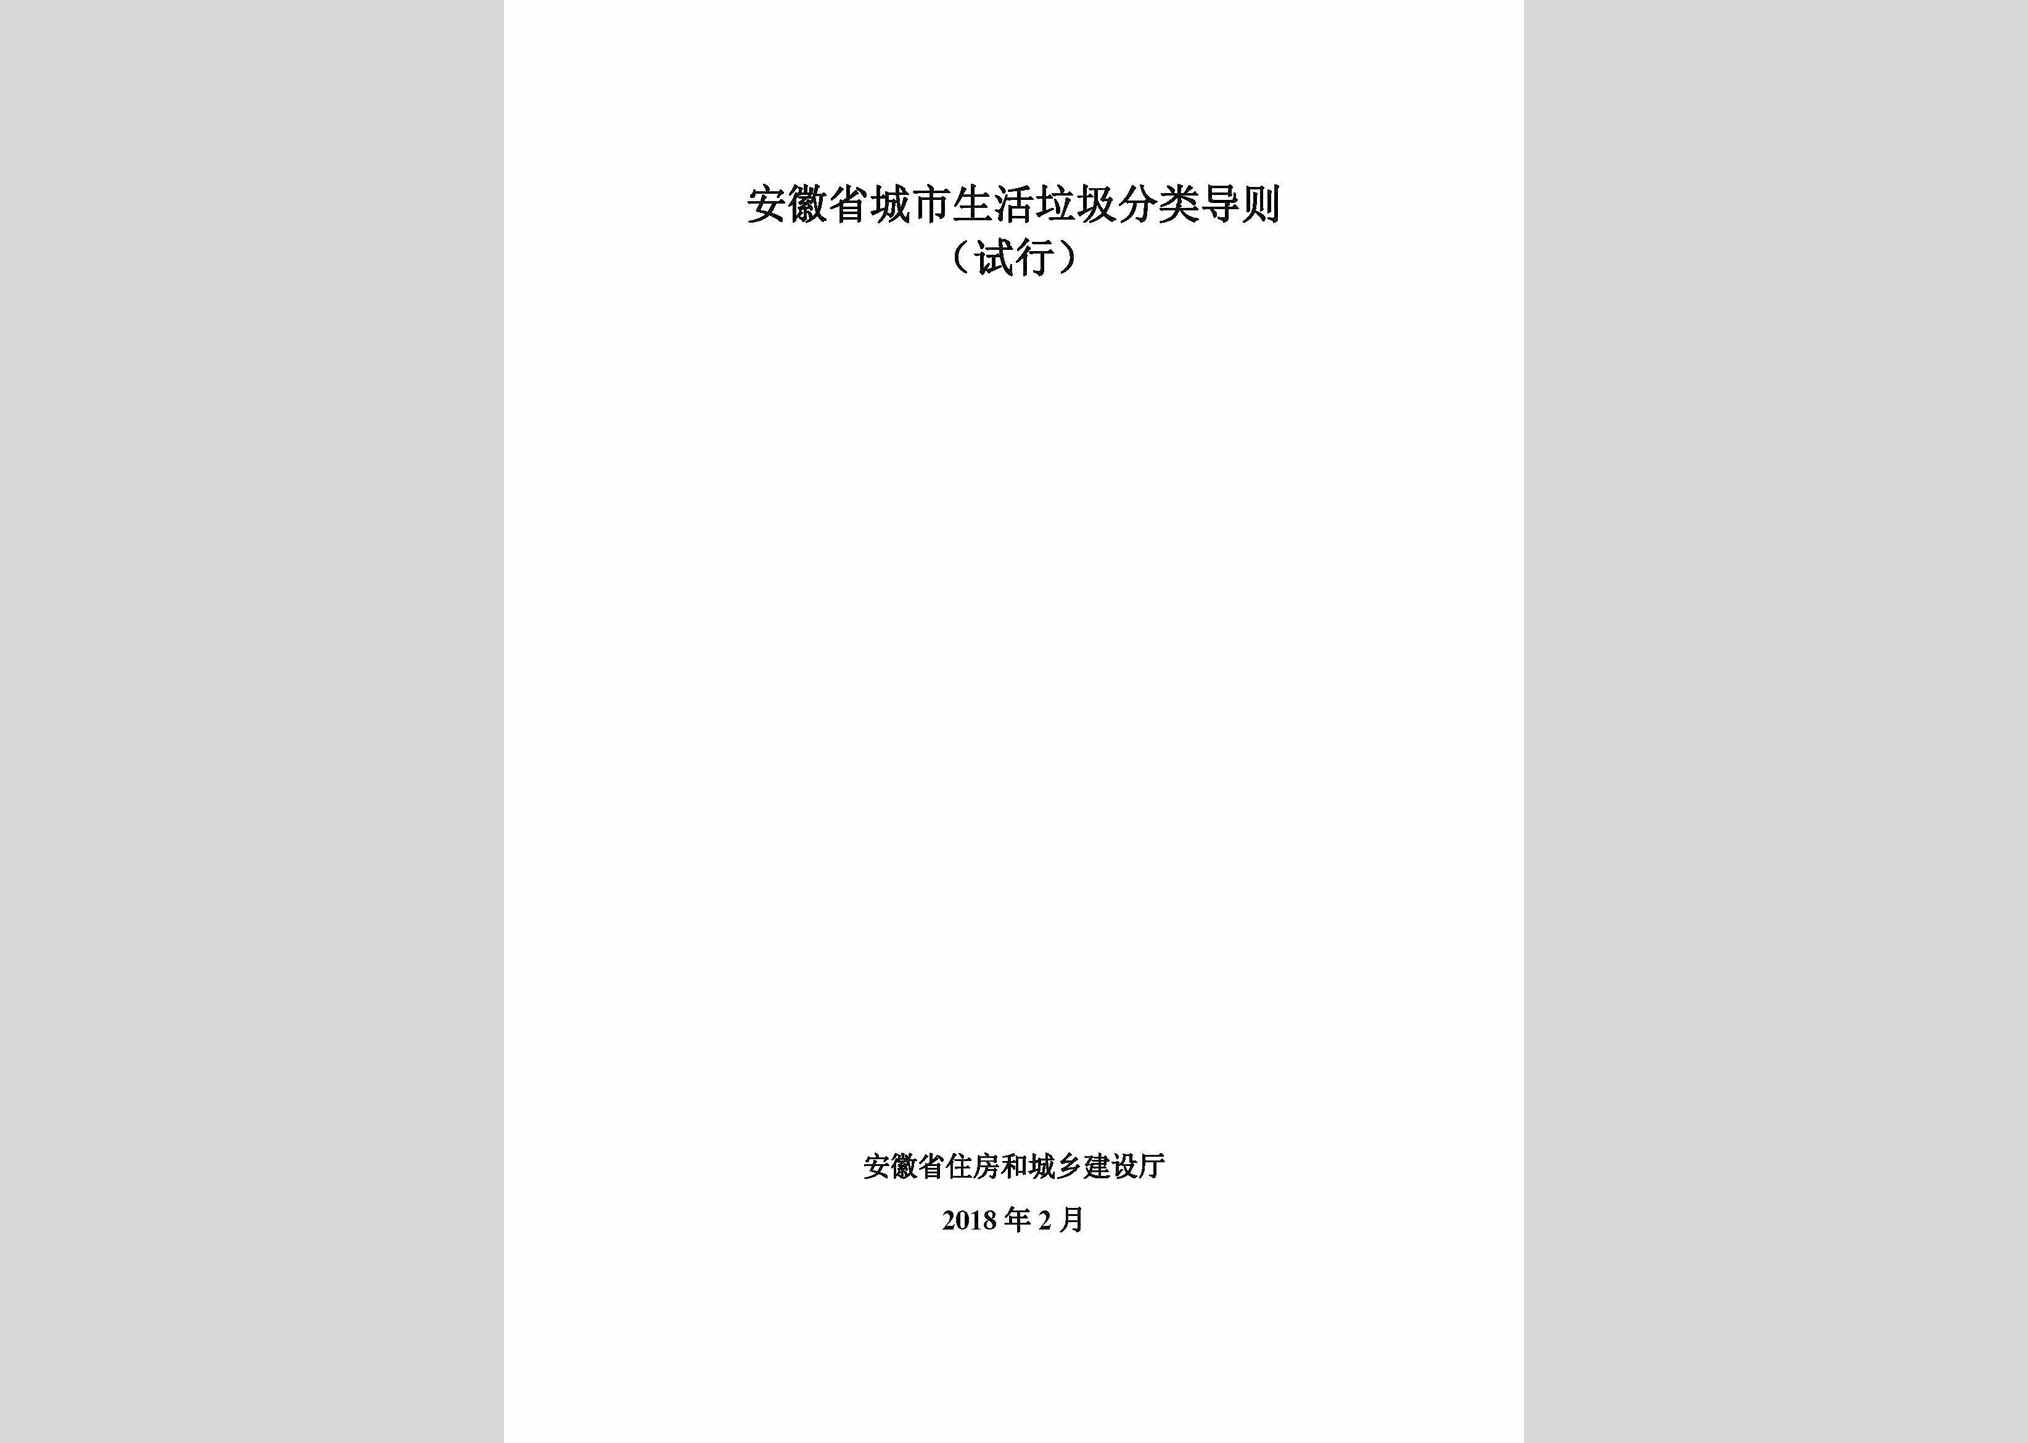 CSSHLJFL：安徽省城市生活垃圾分类导则(试行)